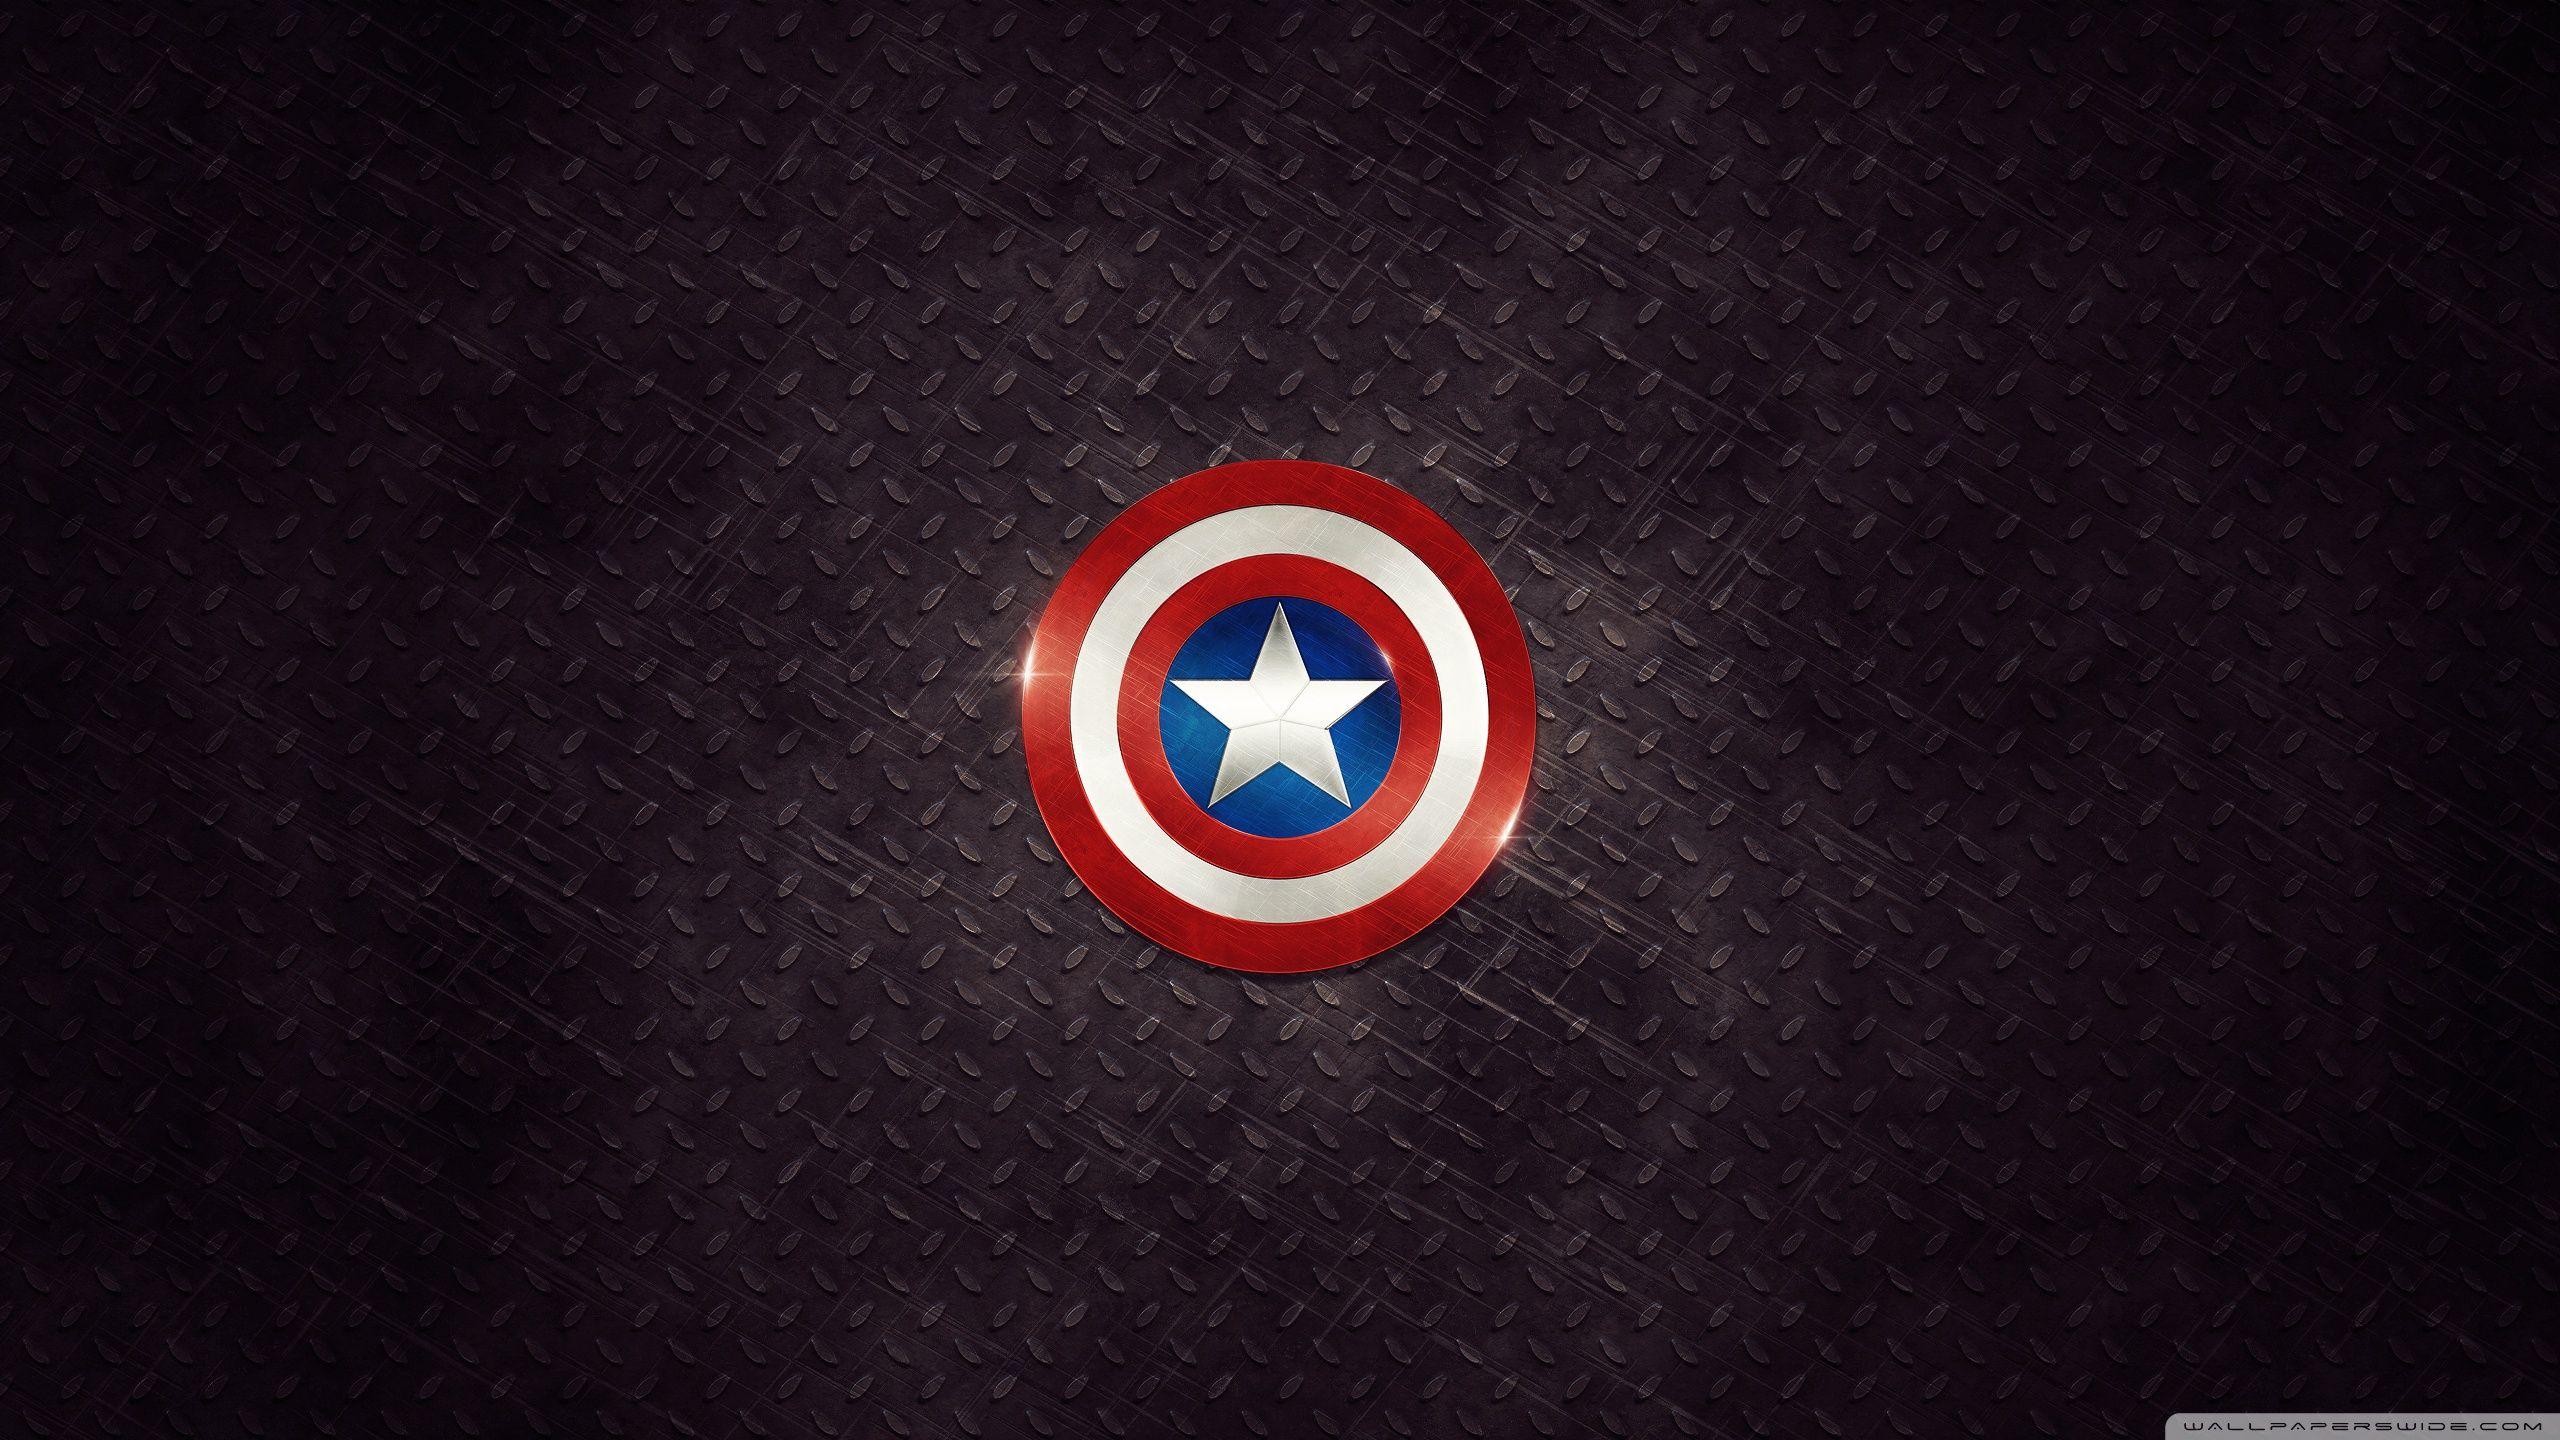 Captain America Shield Wallpaper HD on Wallimpex.com